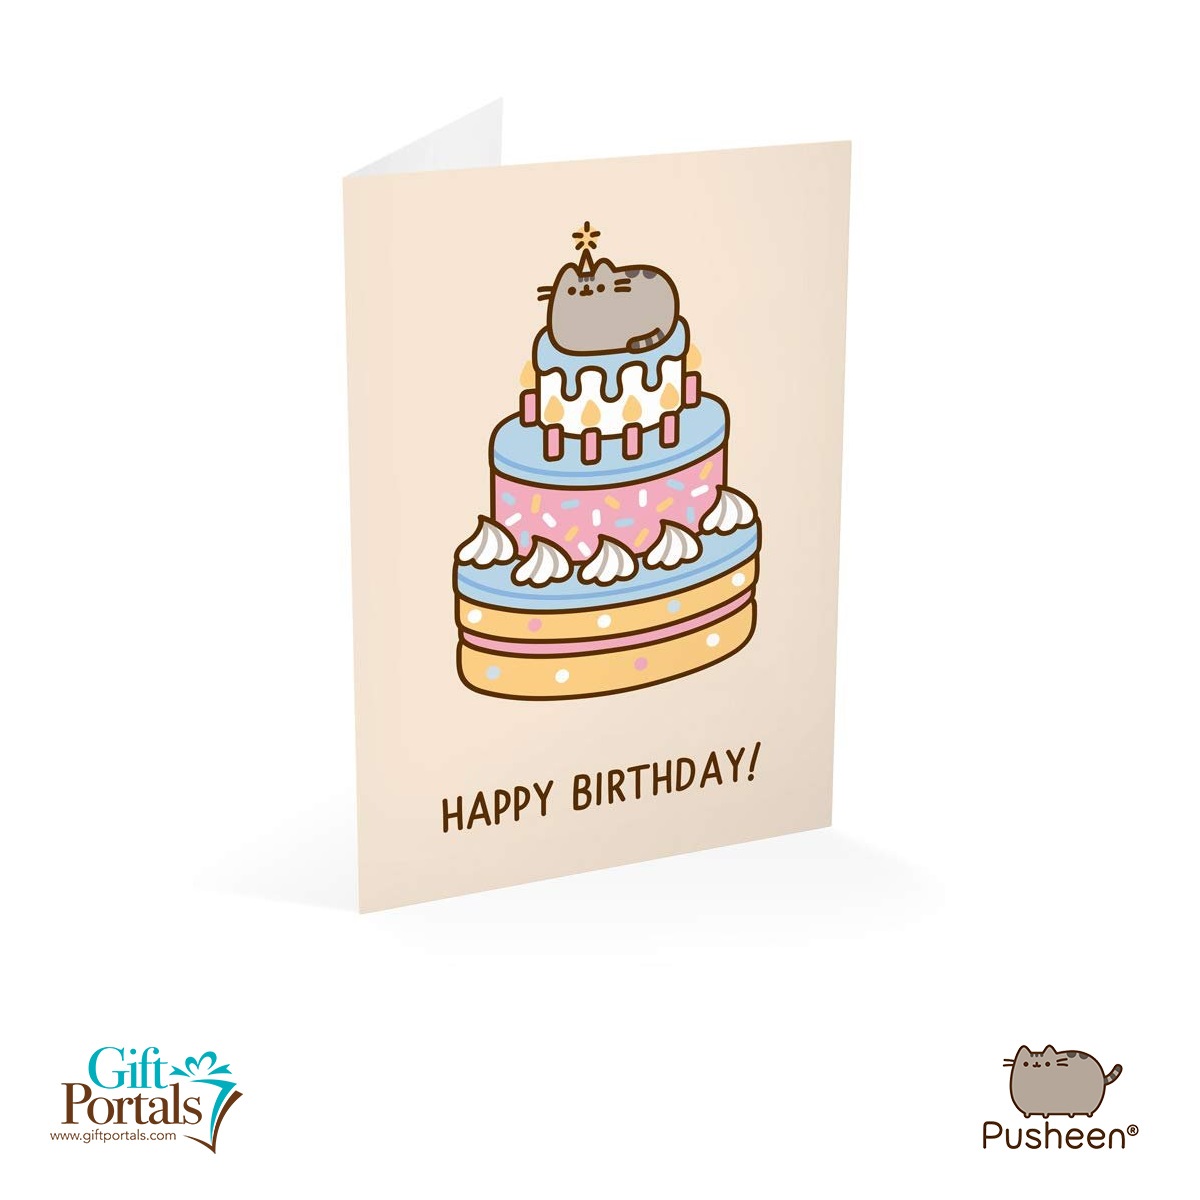 Pusheen Greeting Card Birthday w/ Giant Cake